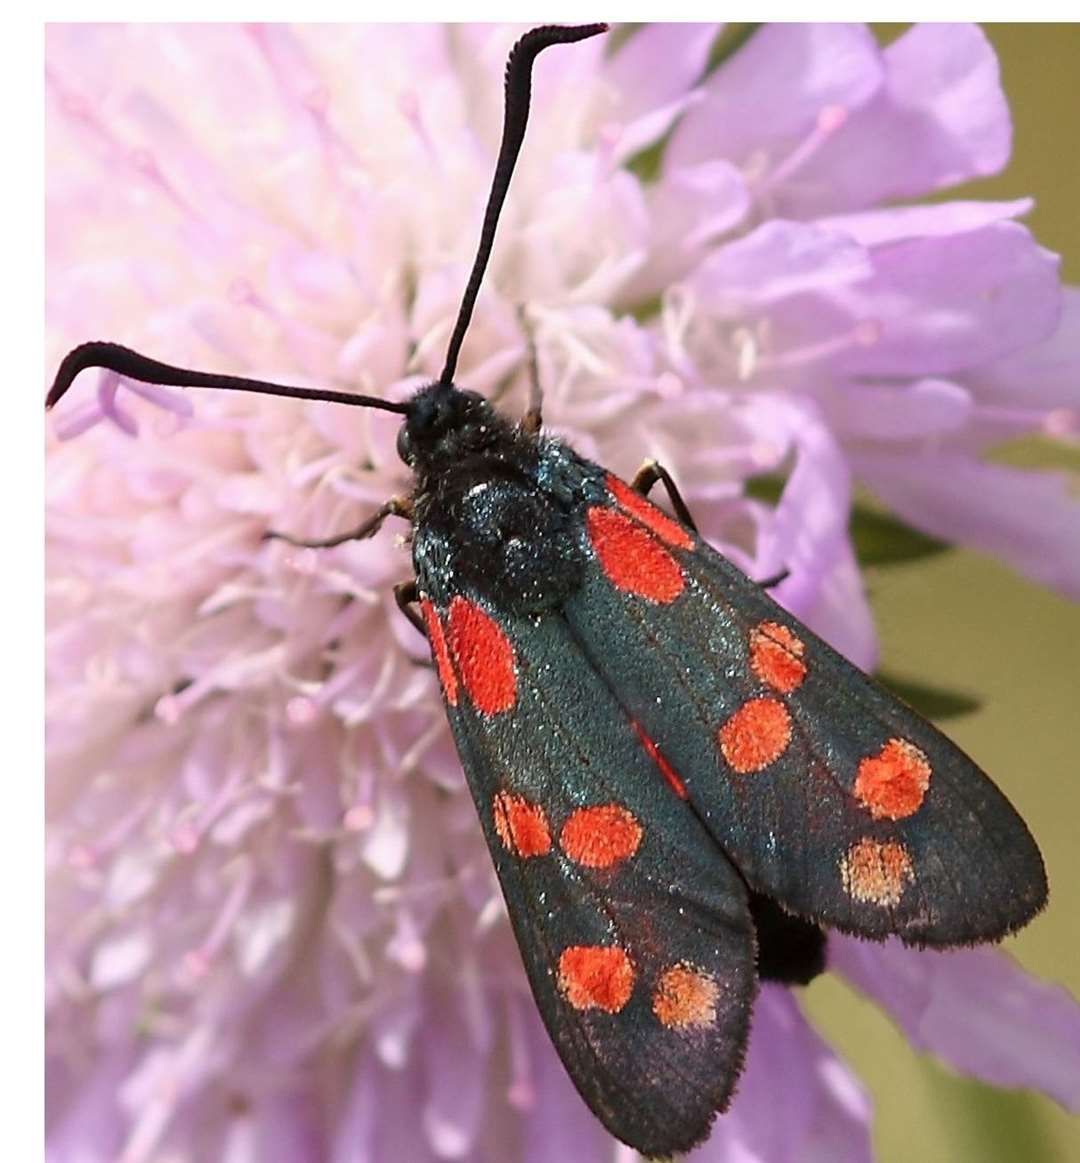 The six spot burnet moth